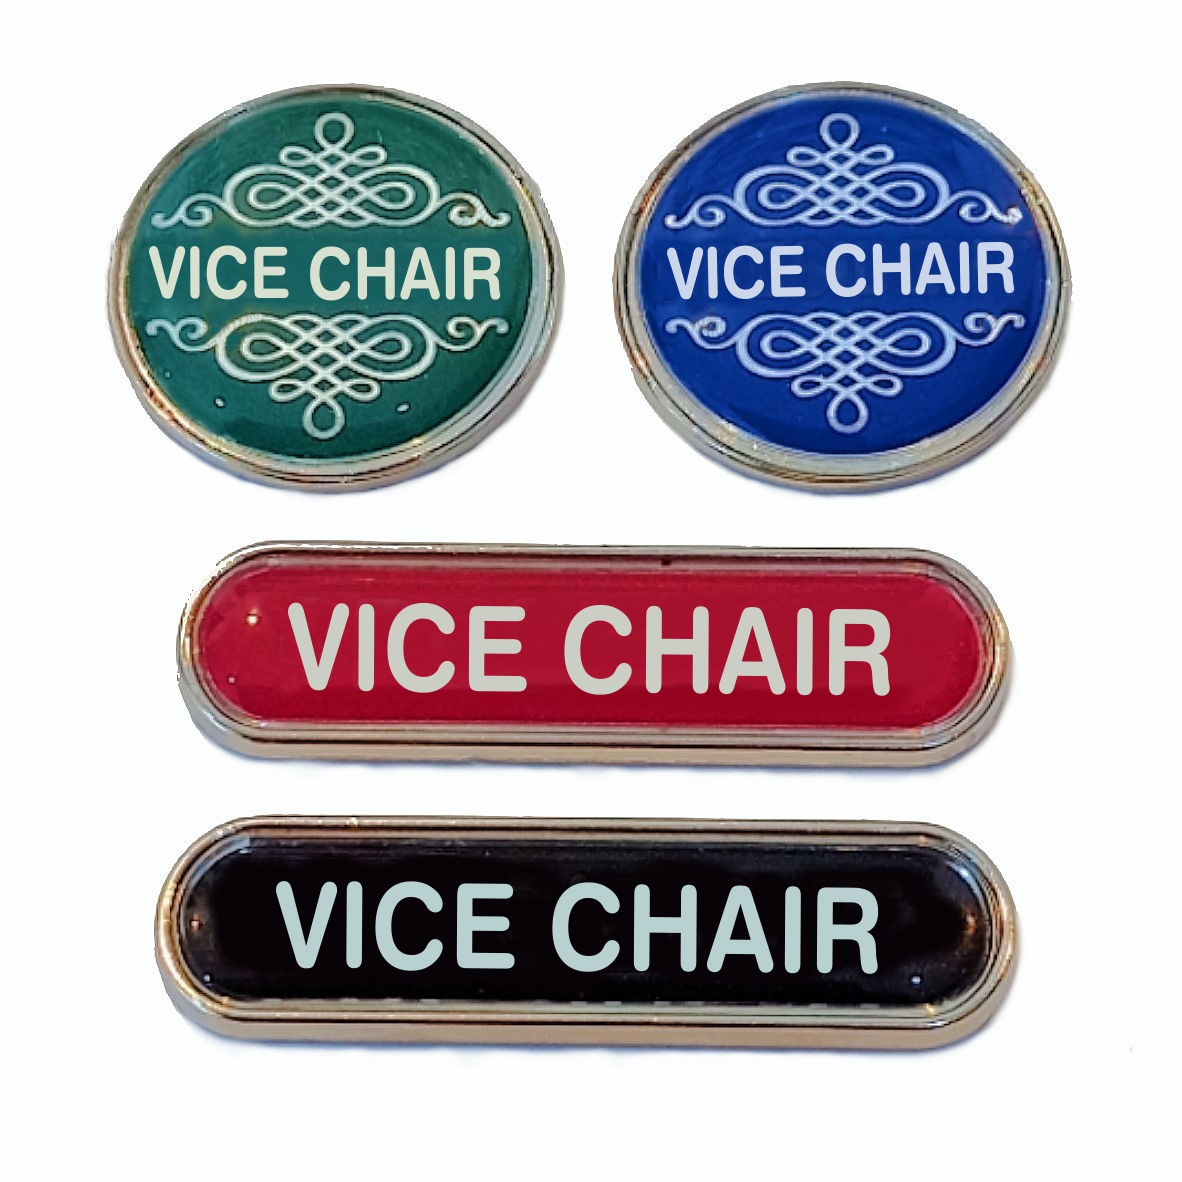 VICE CHAIR badge